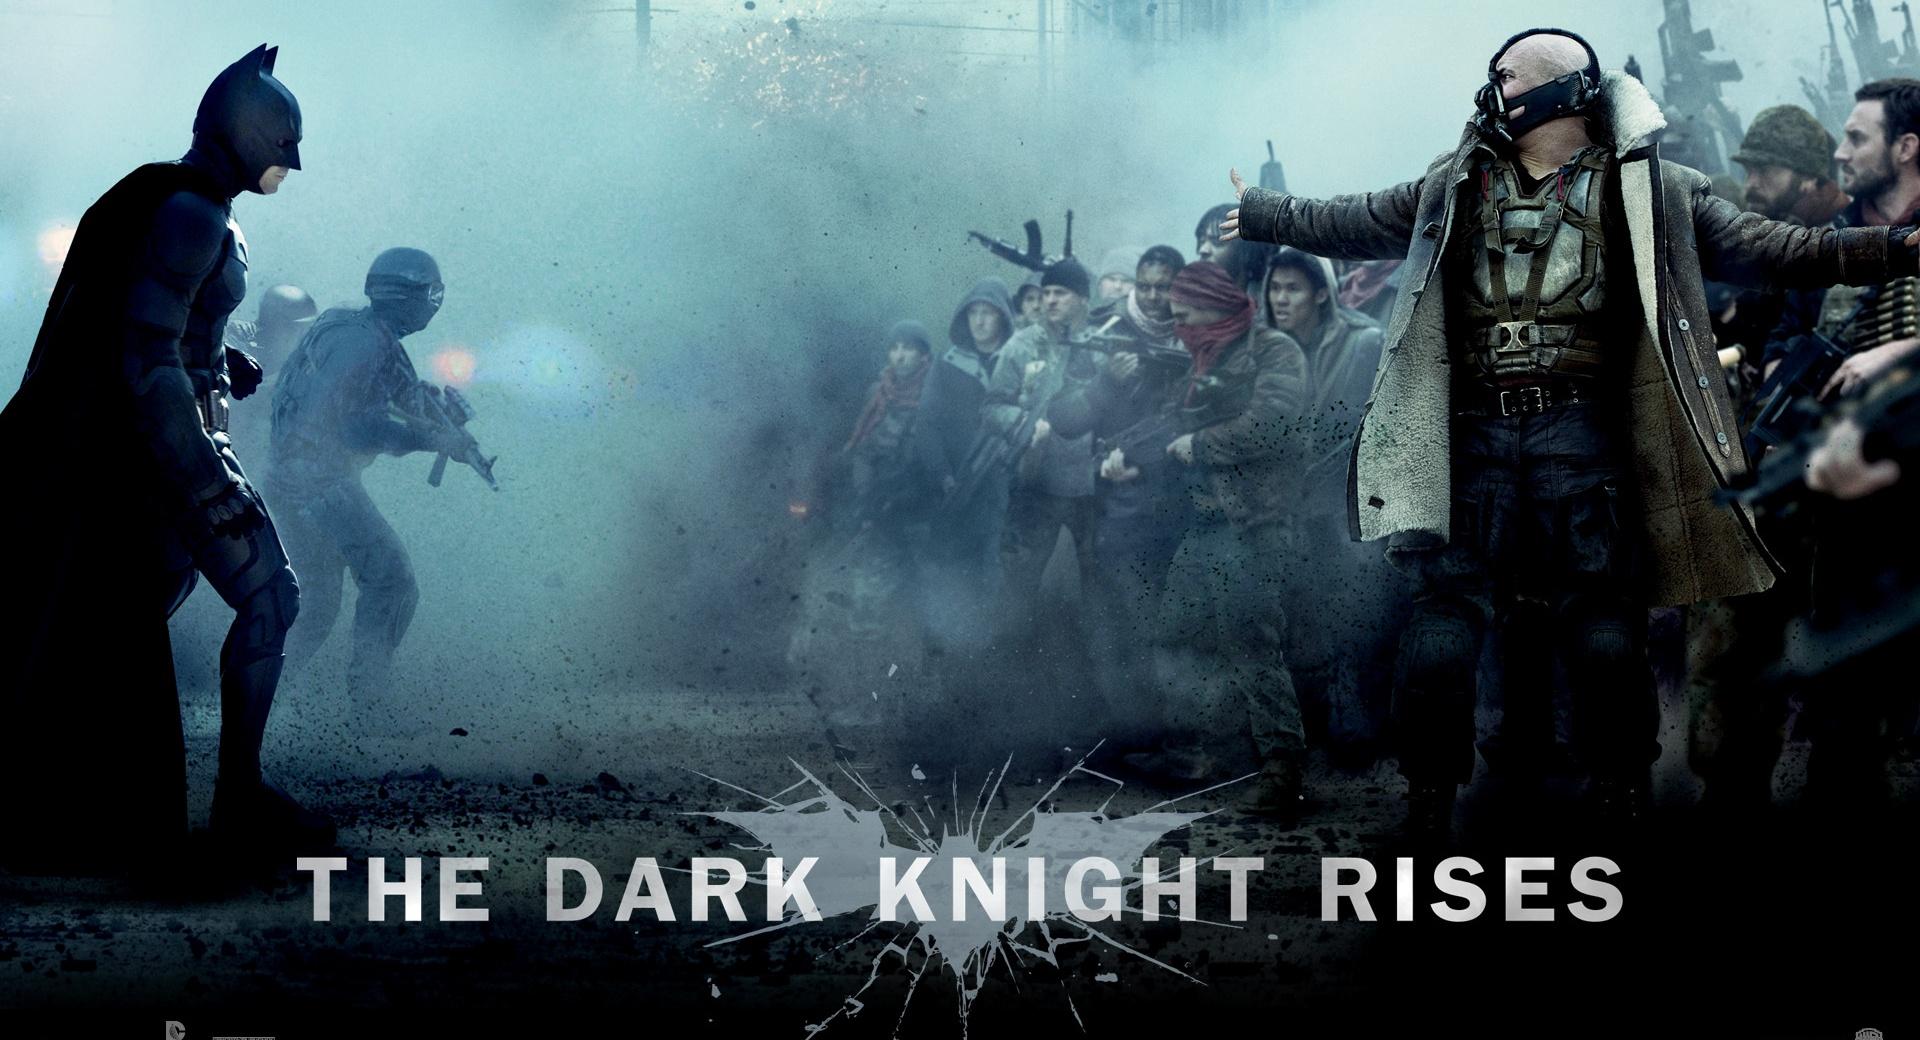 The Dark Knight Rises Bane Vs Batman wallpapers HD quality